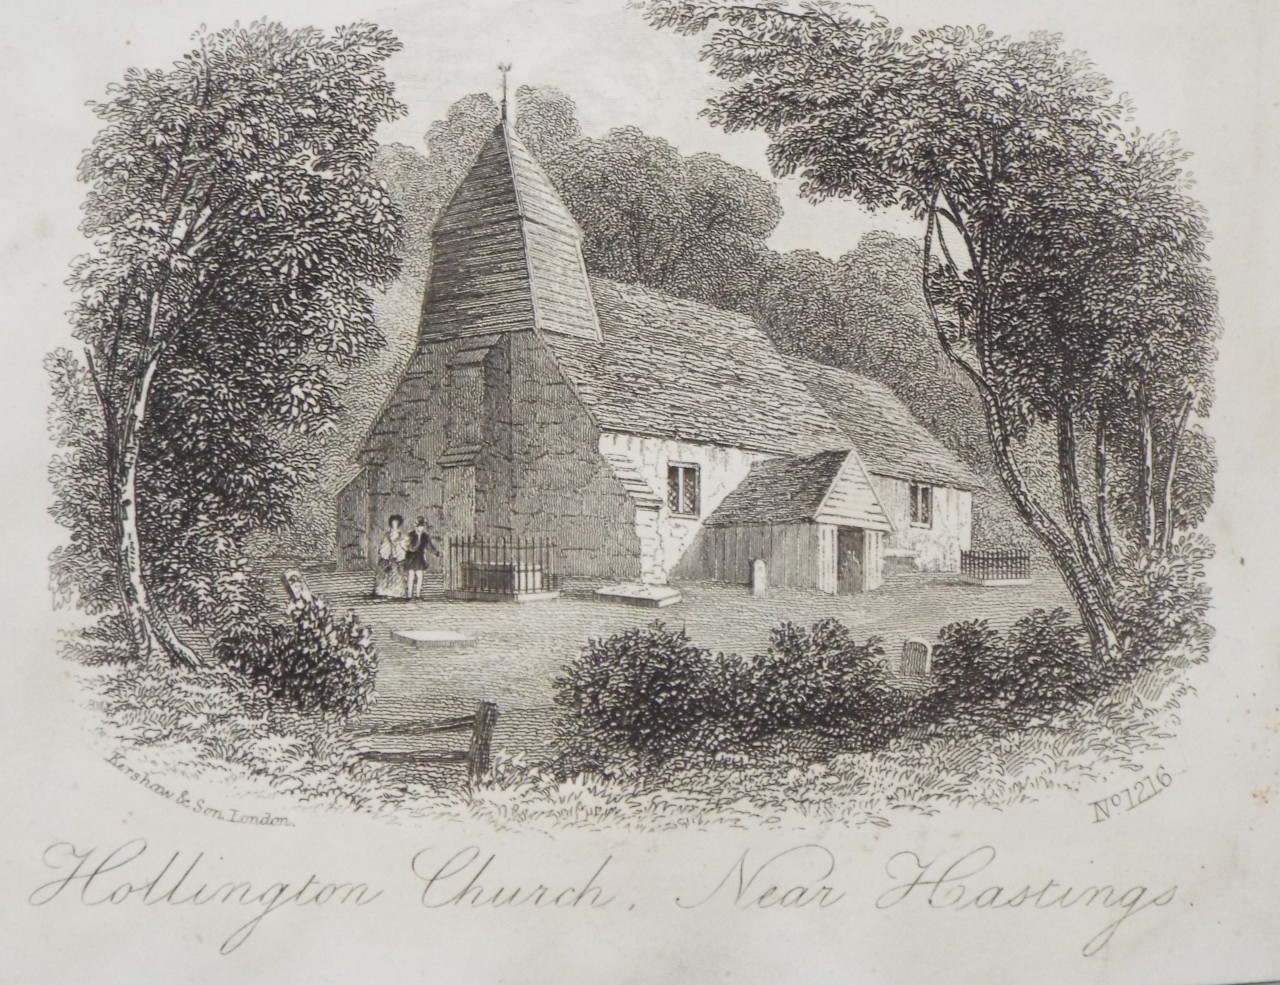 Steel Vignette - Hollington Church, Near Hastings. - Kershaw